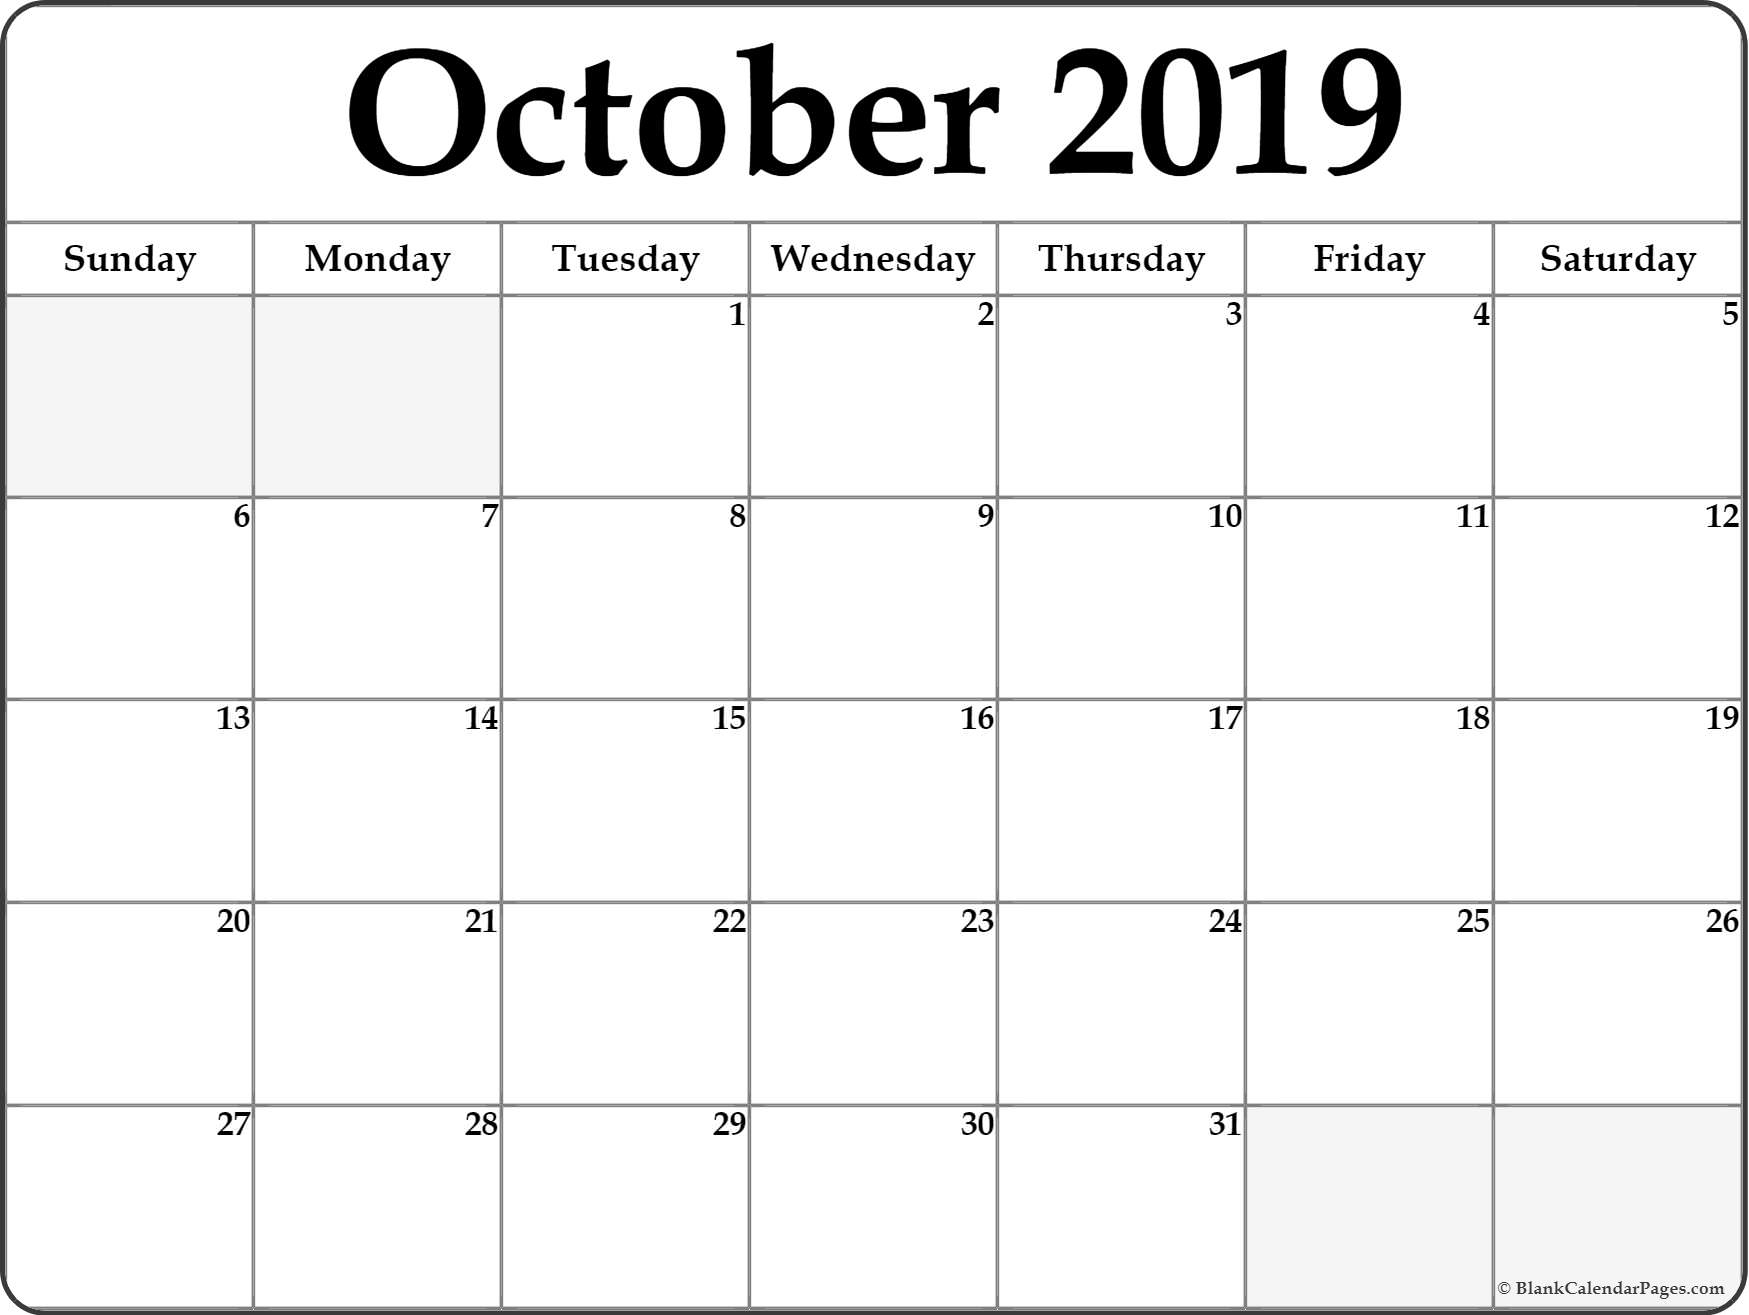 October 2019 Calendar | Free Printable Monthly Calendars